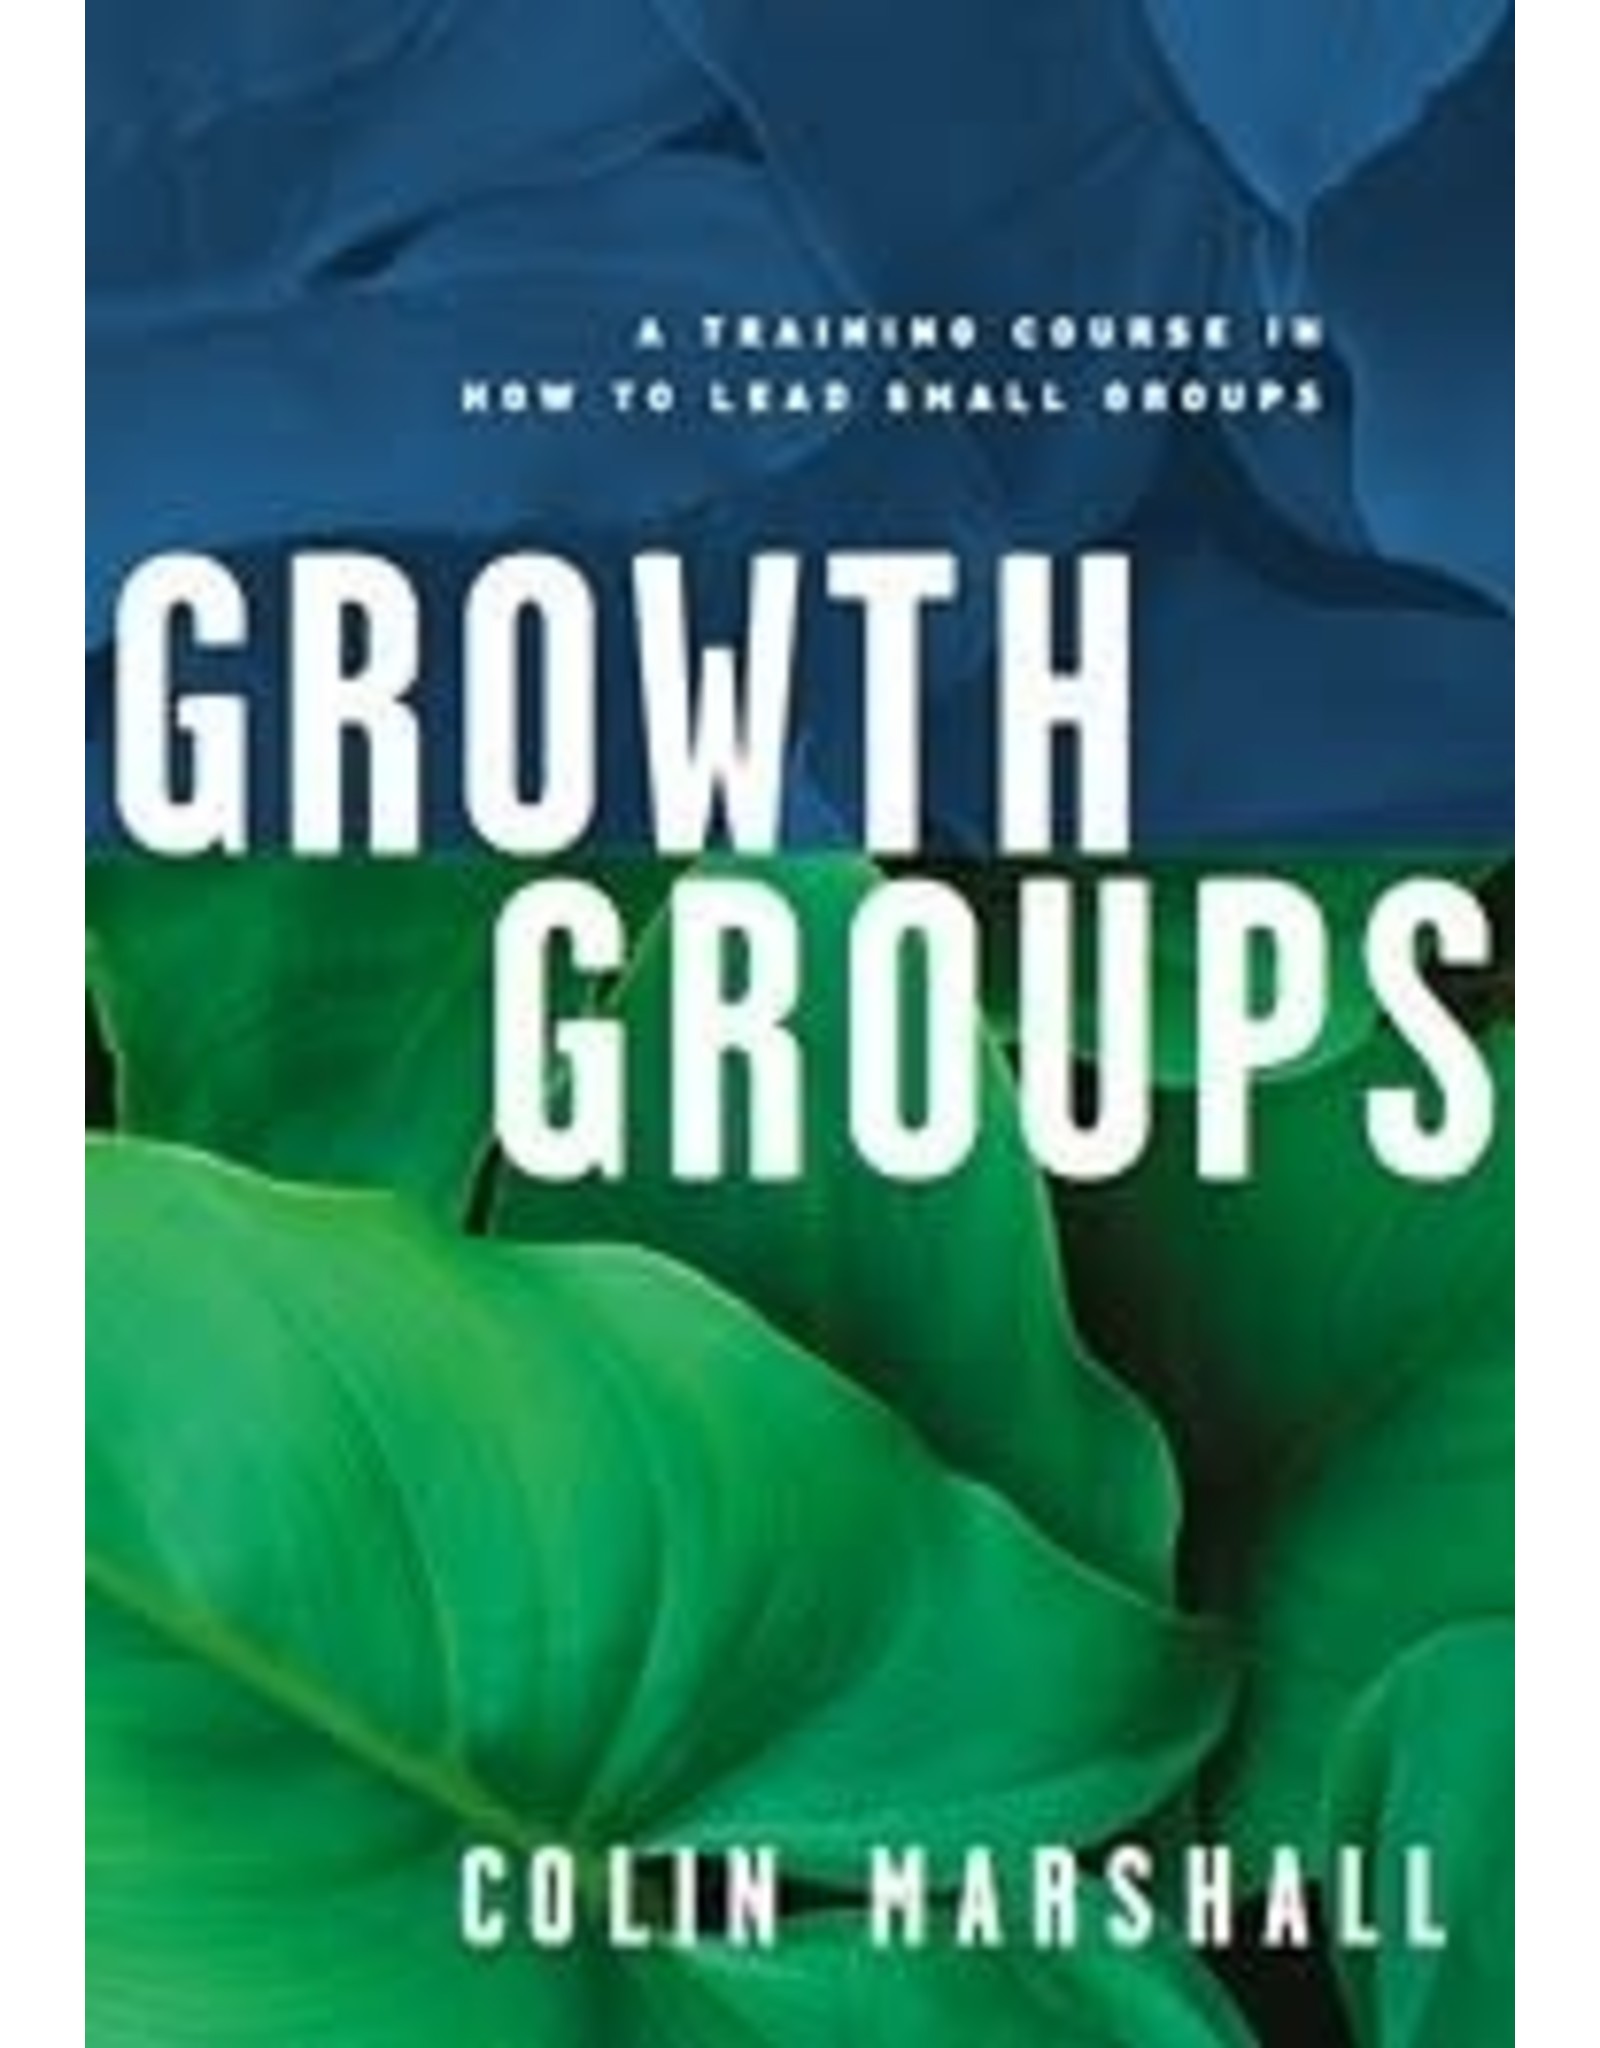 Marshall Growth Groups